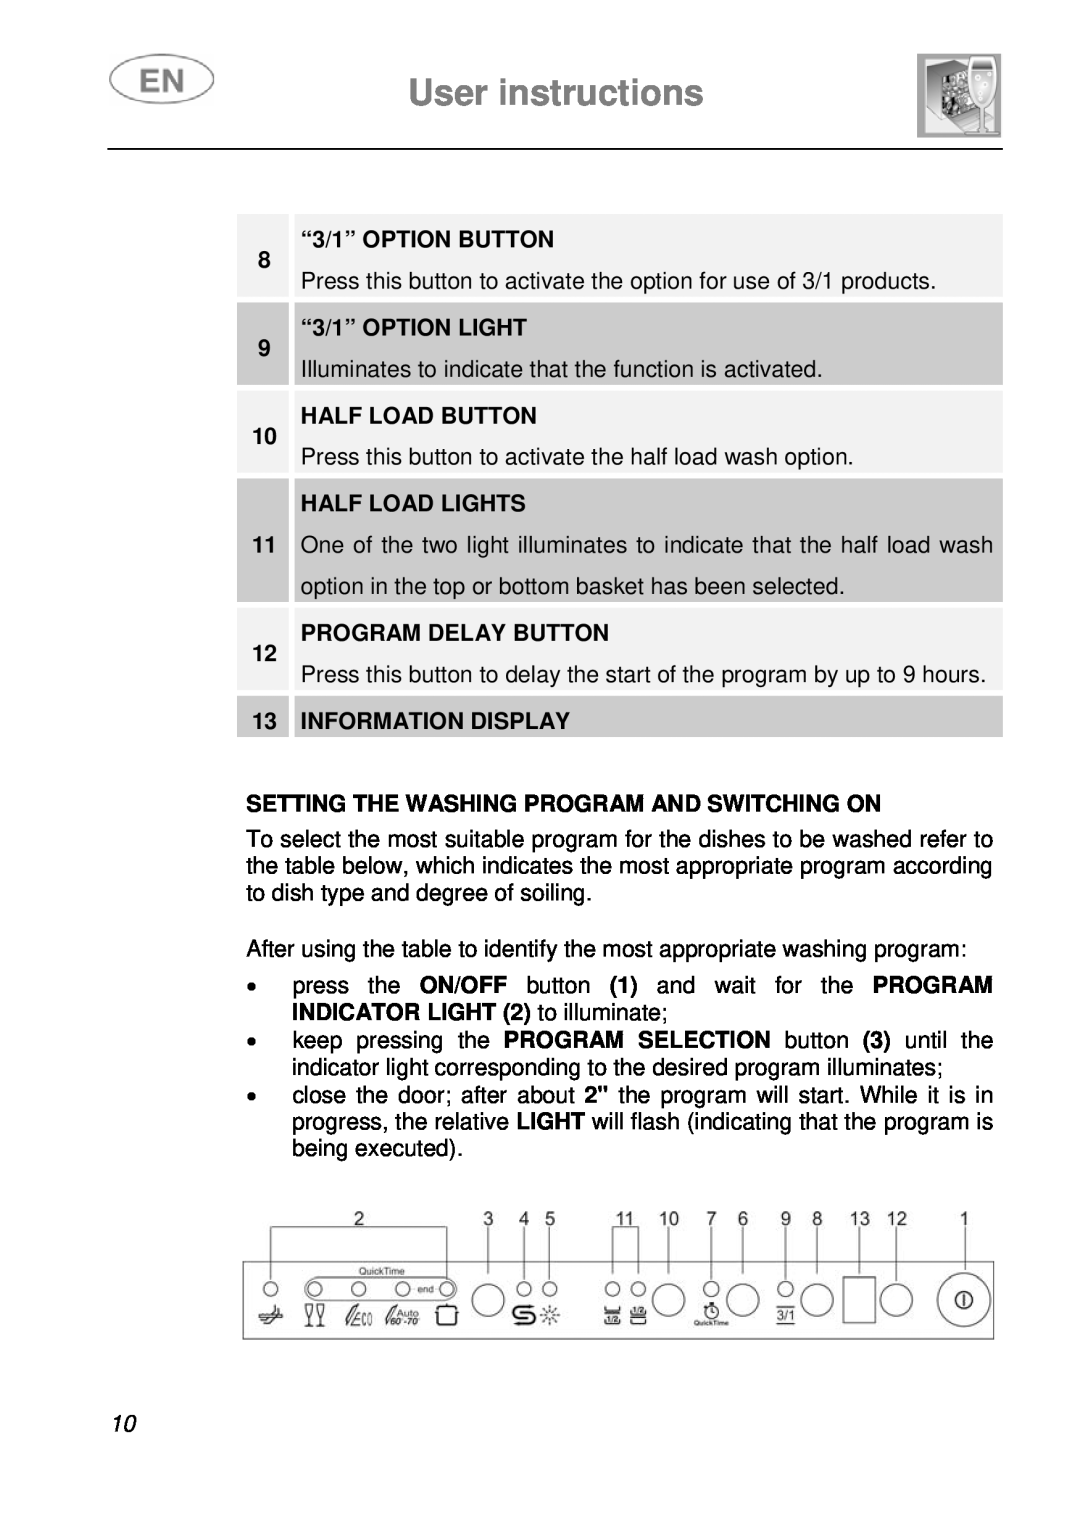 Smeg DI612A1 User instructions, “3/1” OPTION BUTTON, “3/1” OPTION LIGHT, Half Load Button, Half Load Lights 